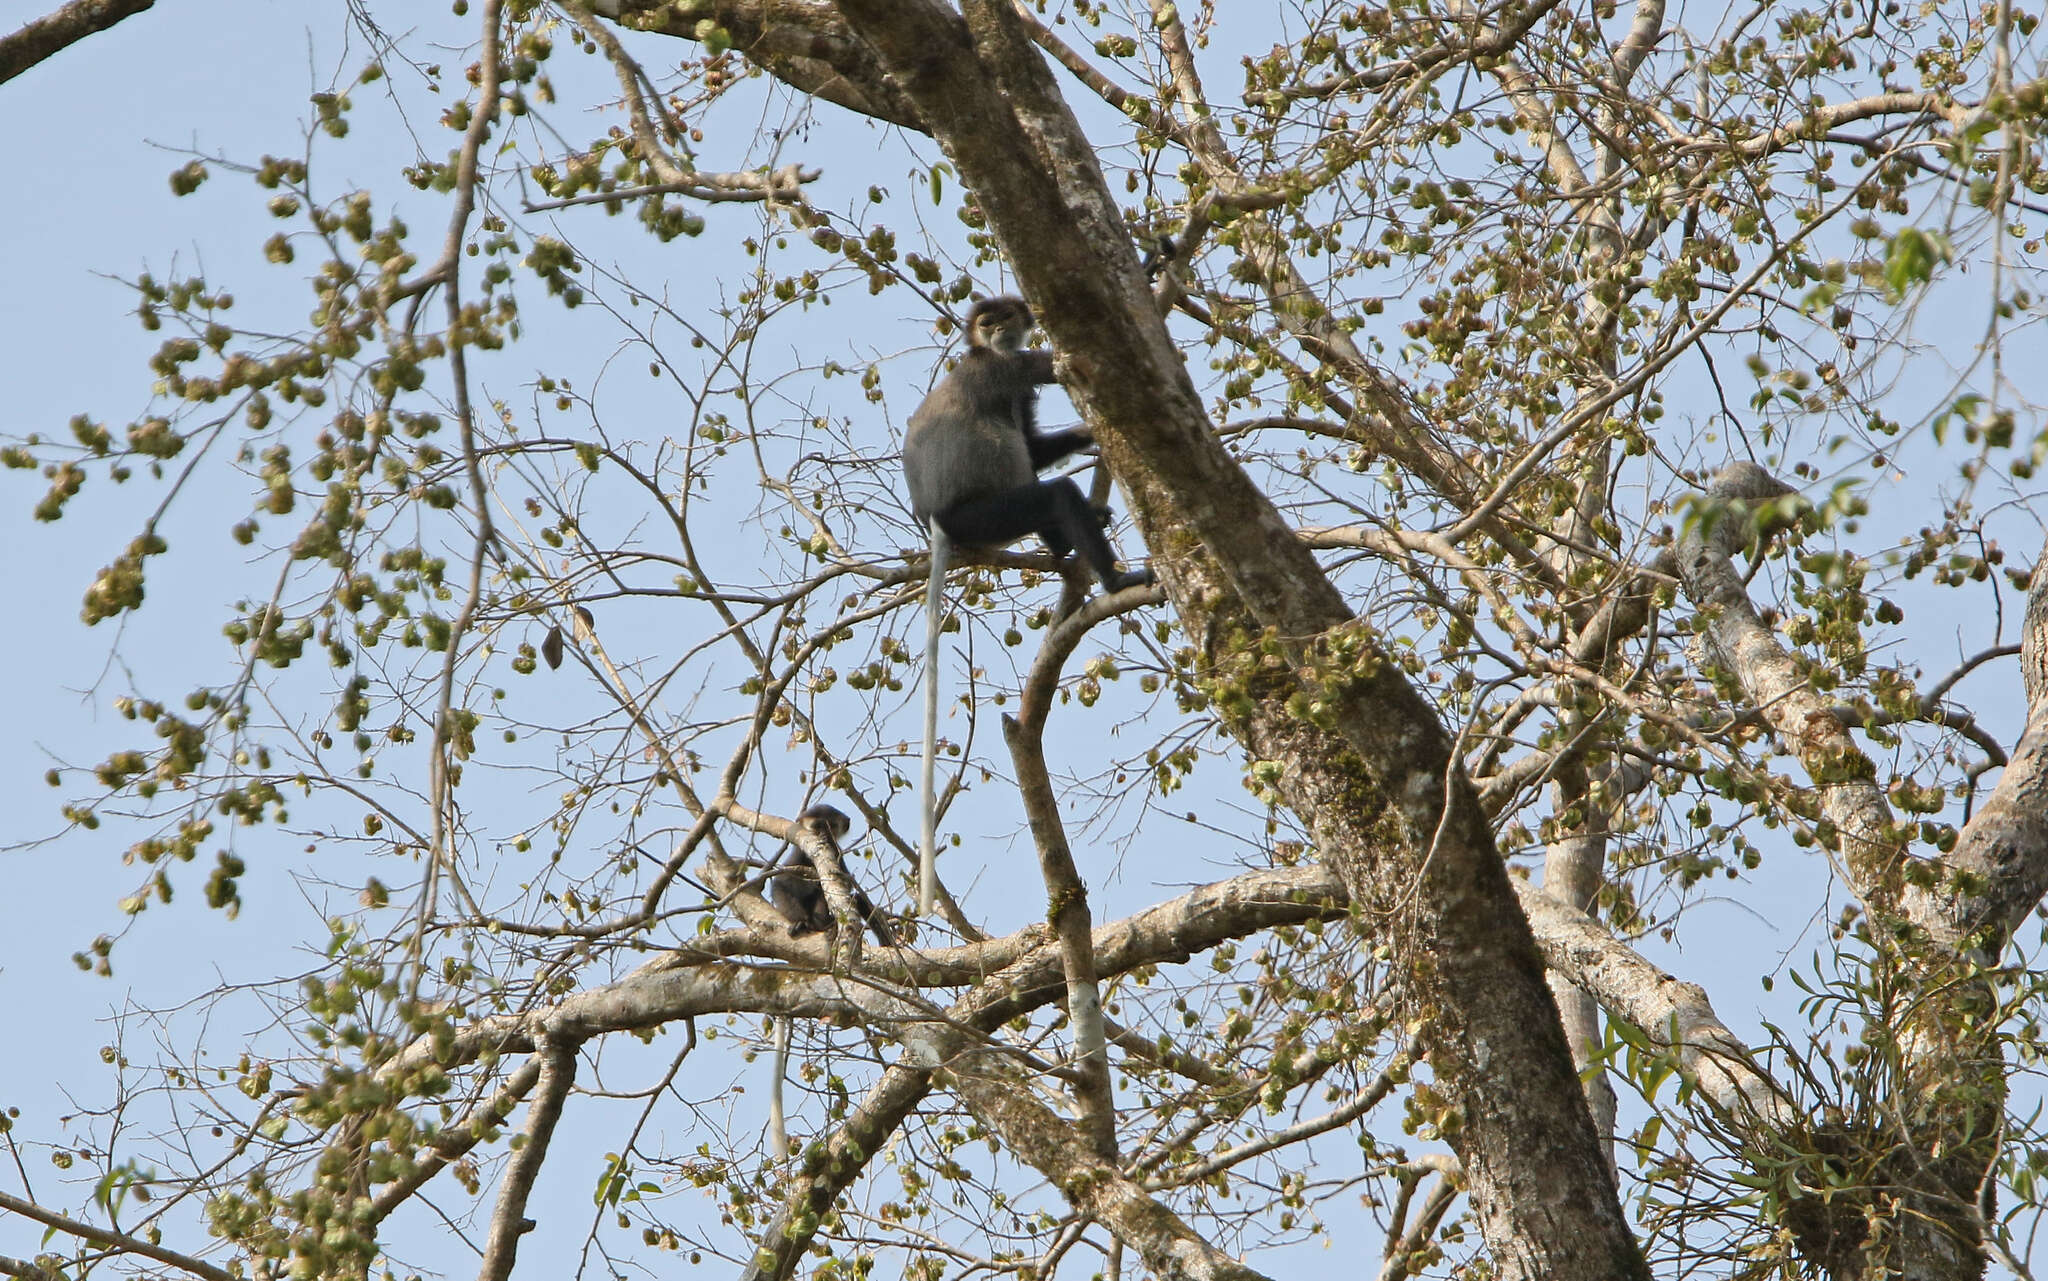 Image of Black-shanked Douc Langur